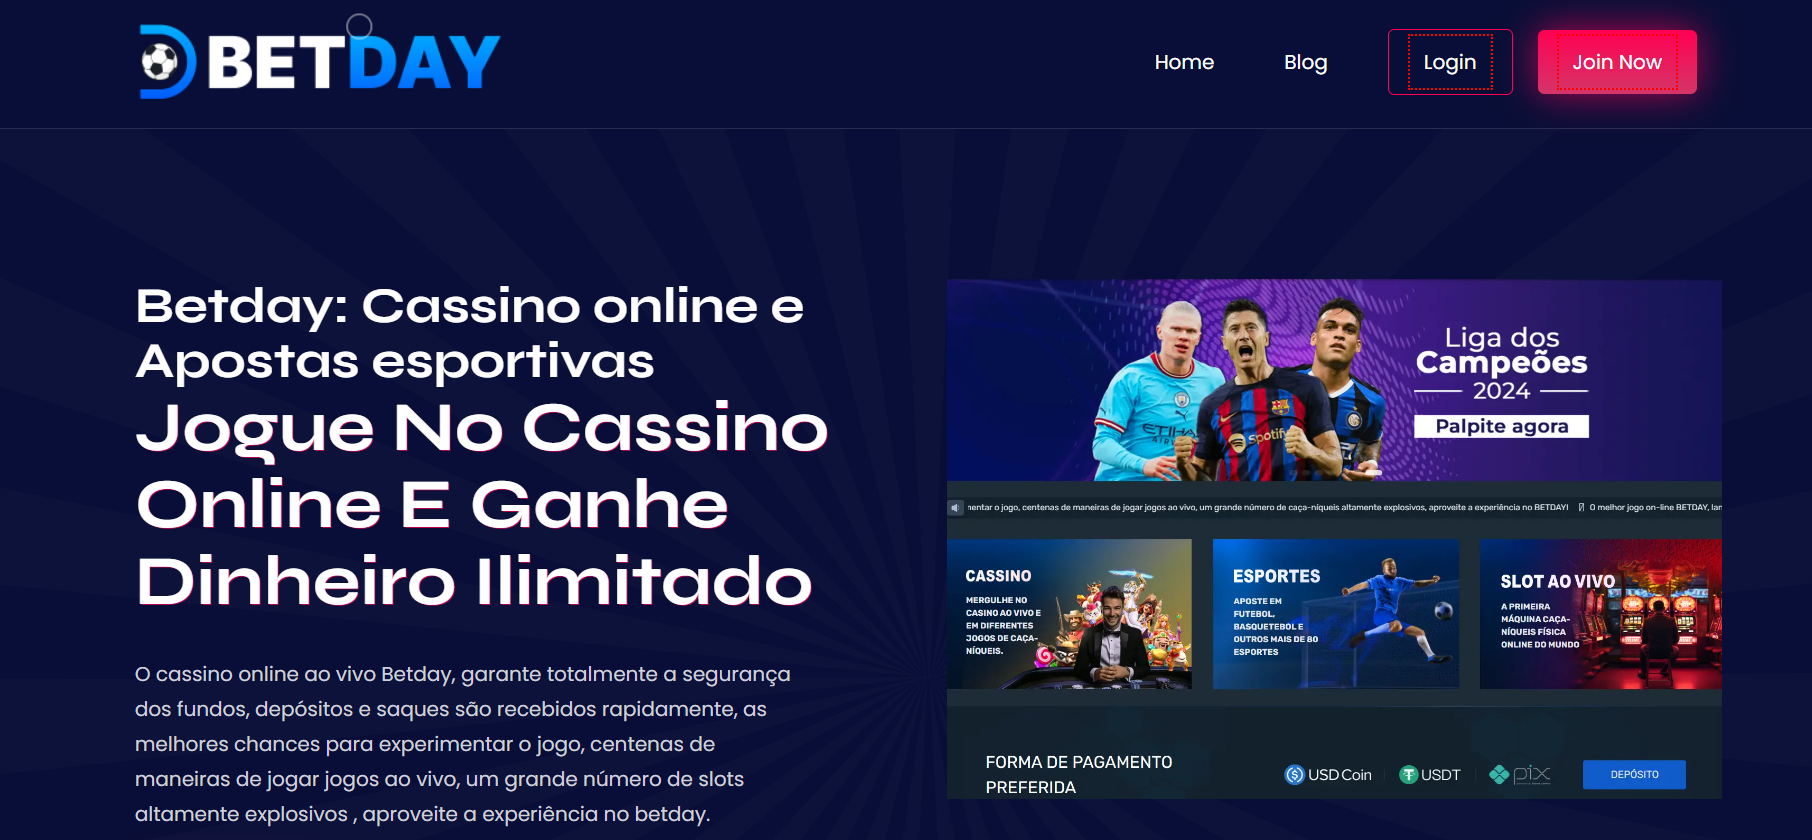 Betday Casino Online: Understanding The Different Types of Games